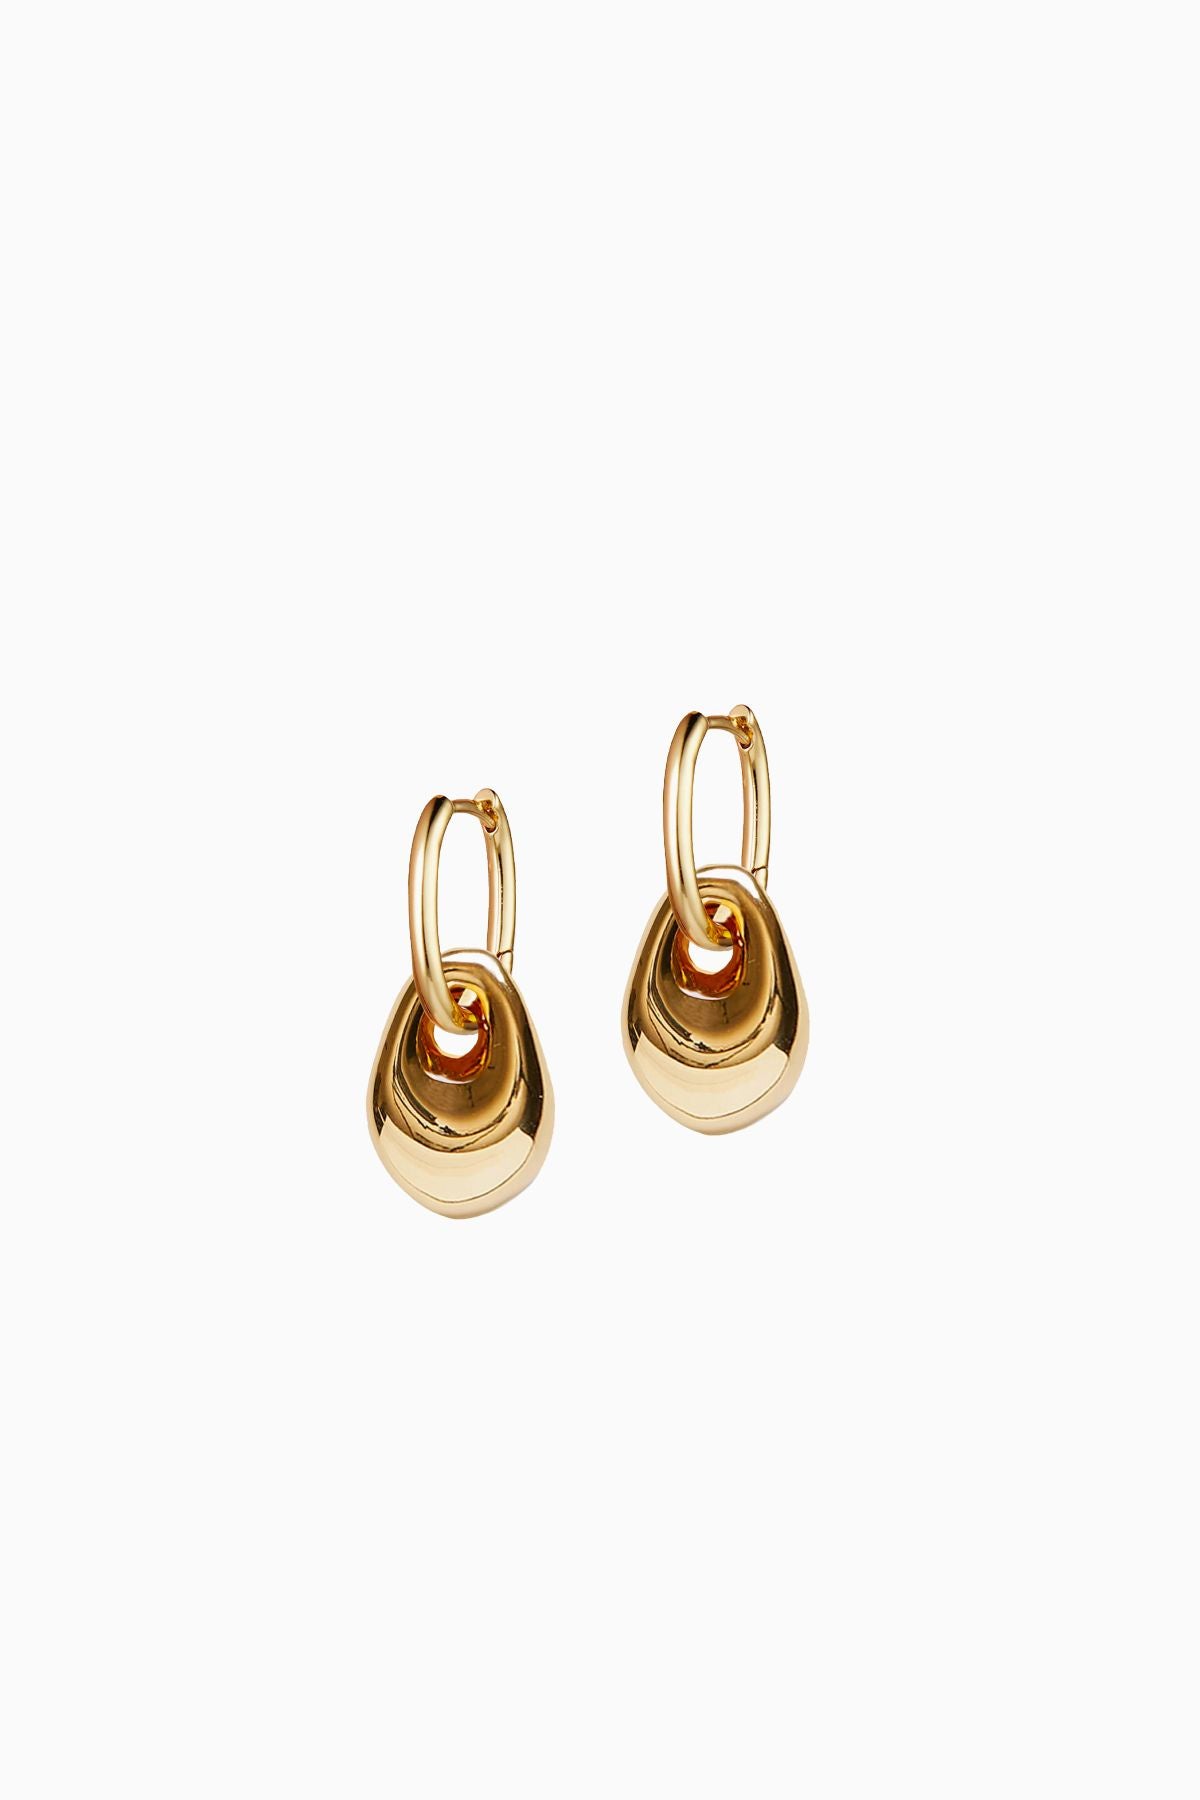 Anni Lu Golden Pebble Earring - Gold